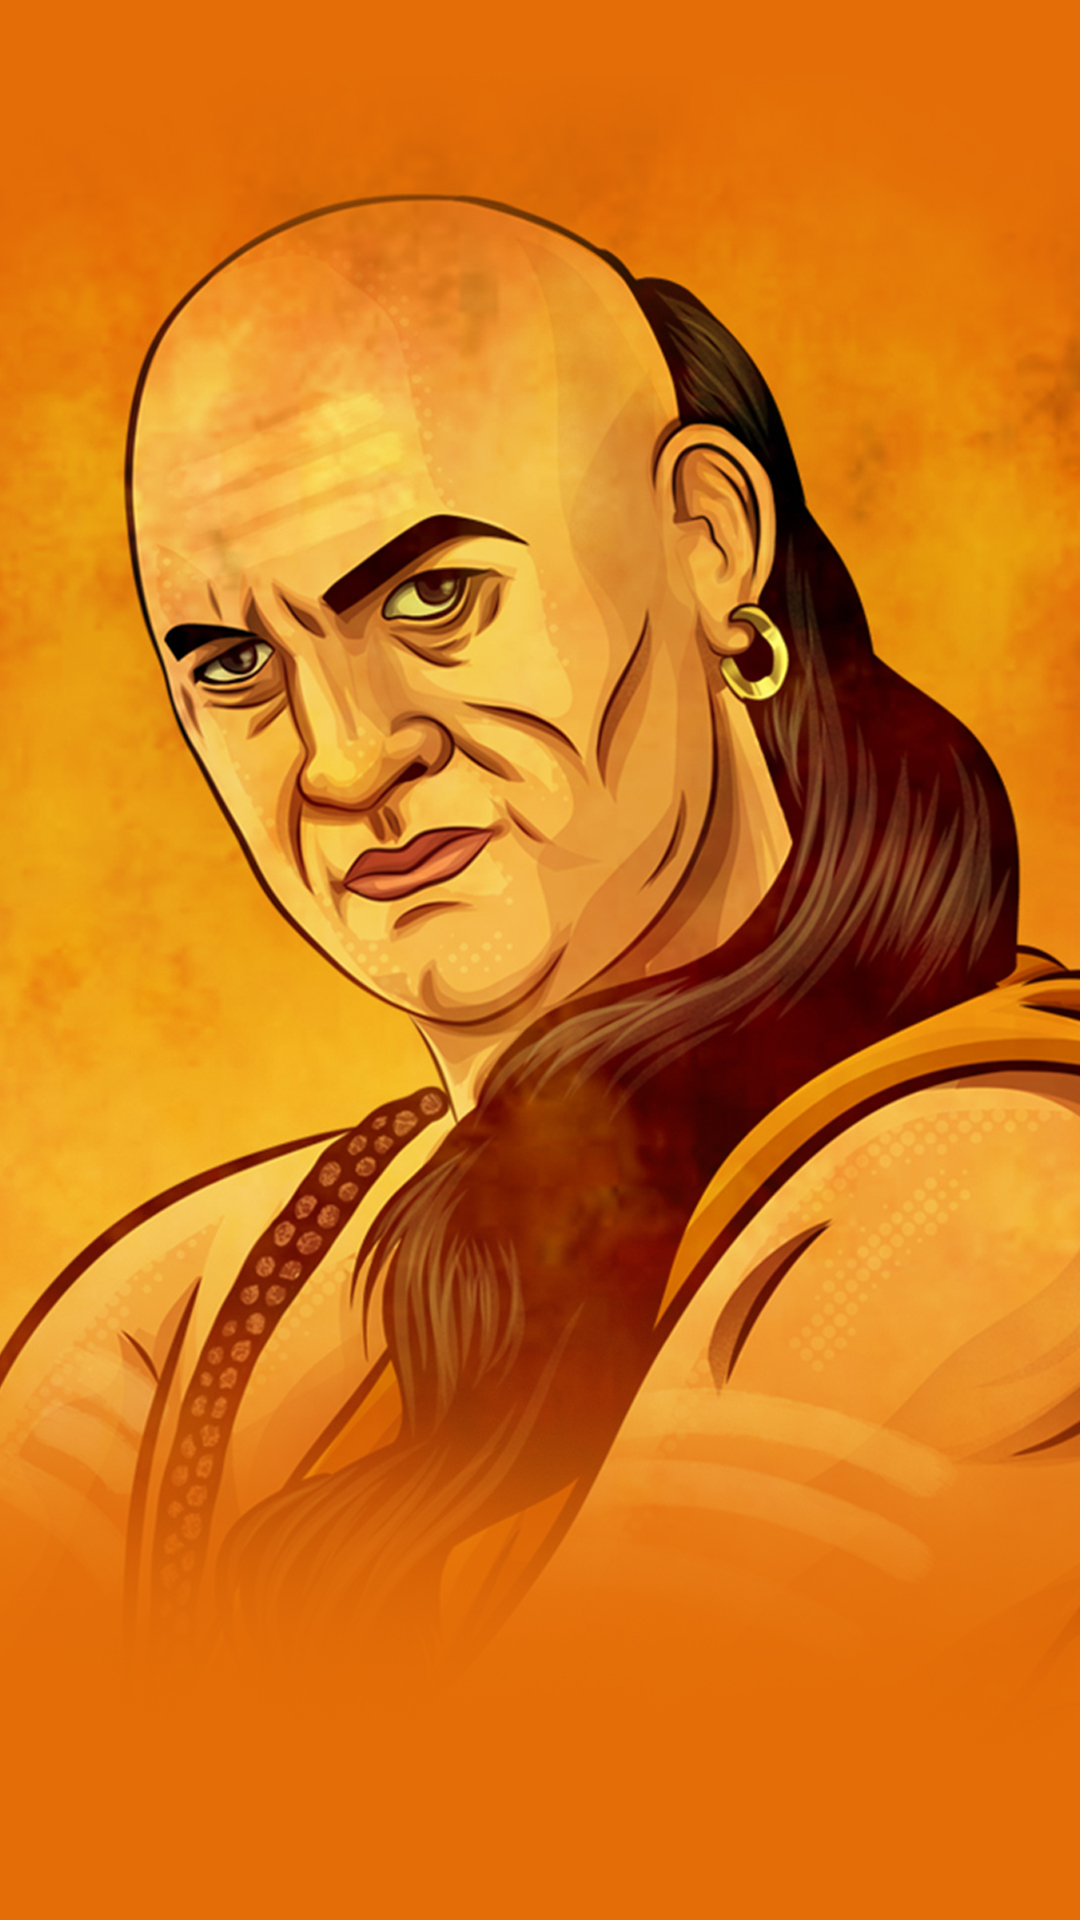 Helpers also become rich, Chanakya said this big.